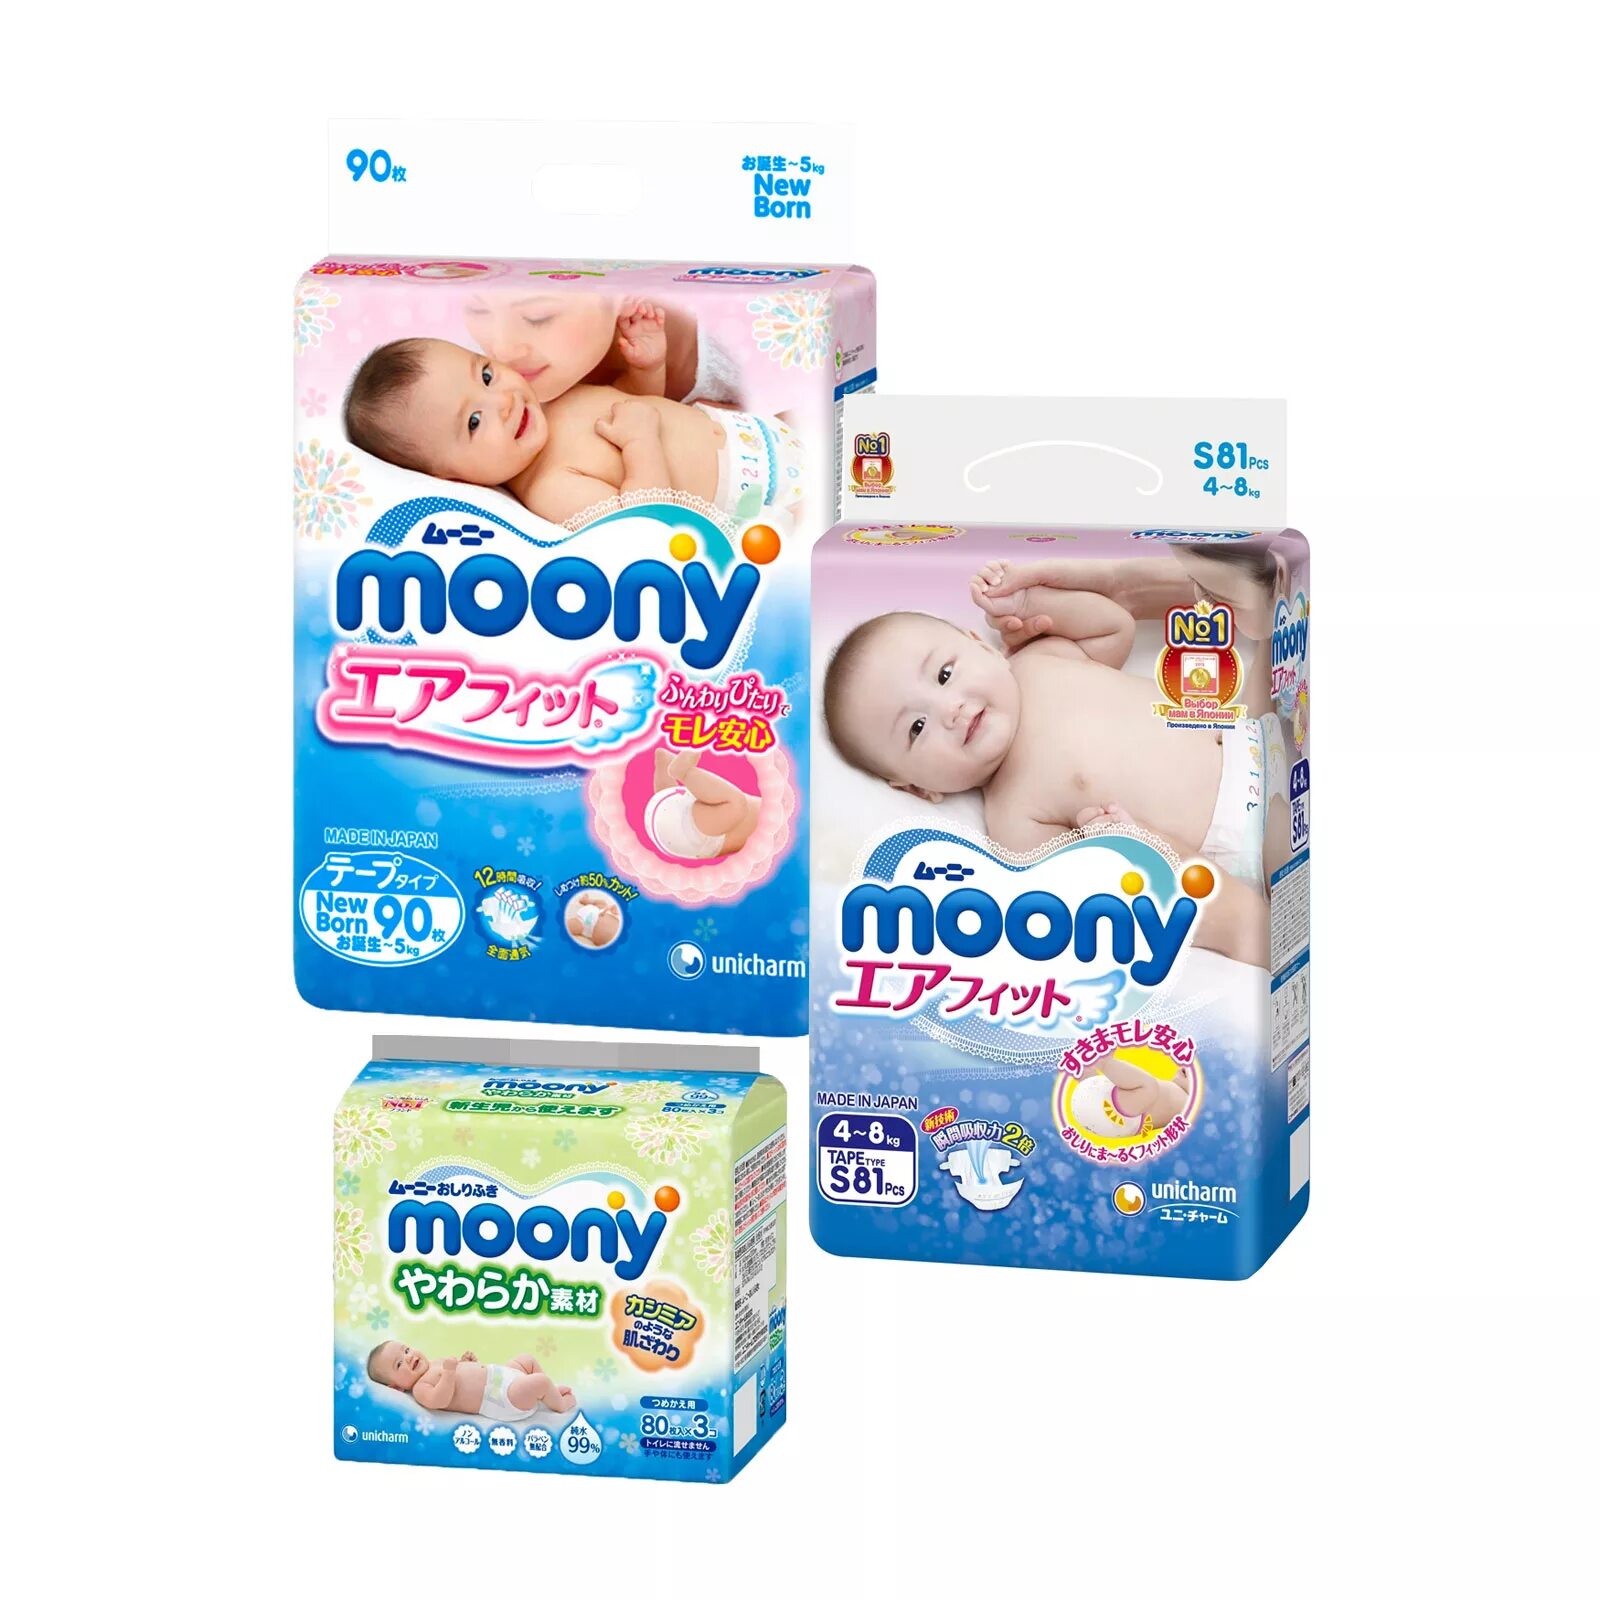 Moony. Подгузники Moony Organic NB. Подгузники Муни для новорожденных. Подгузники Moony для новорожденных. Подгузники Moony о продукции.